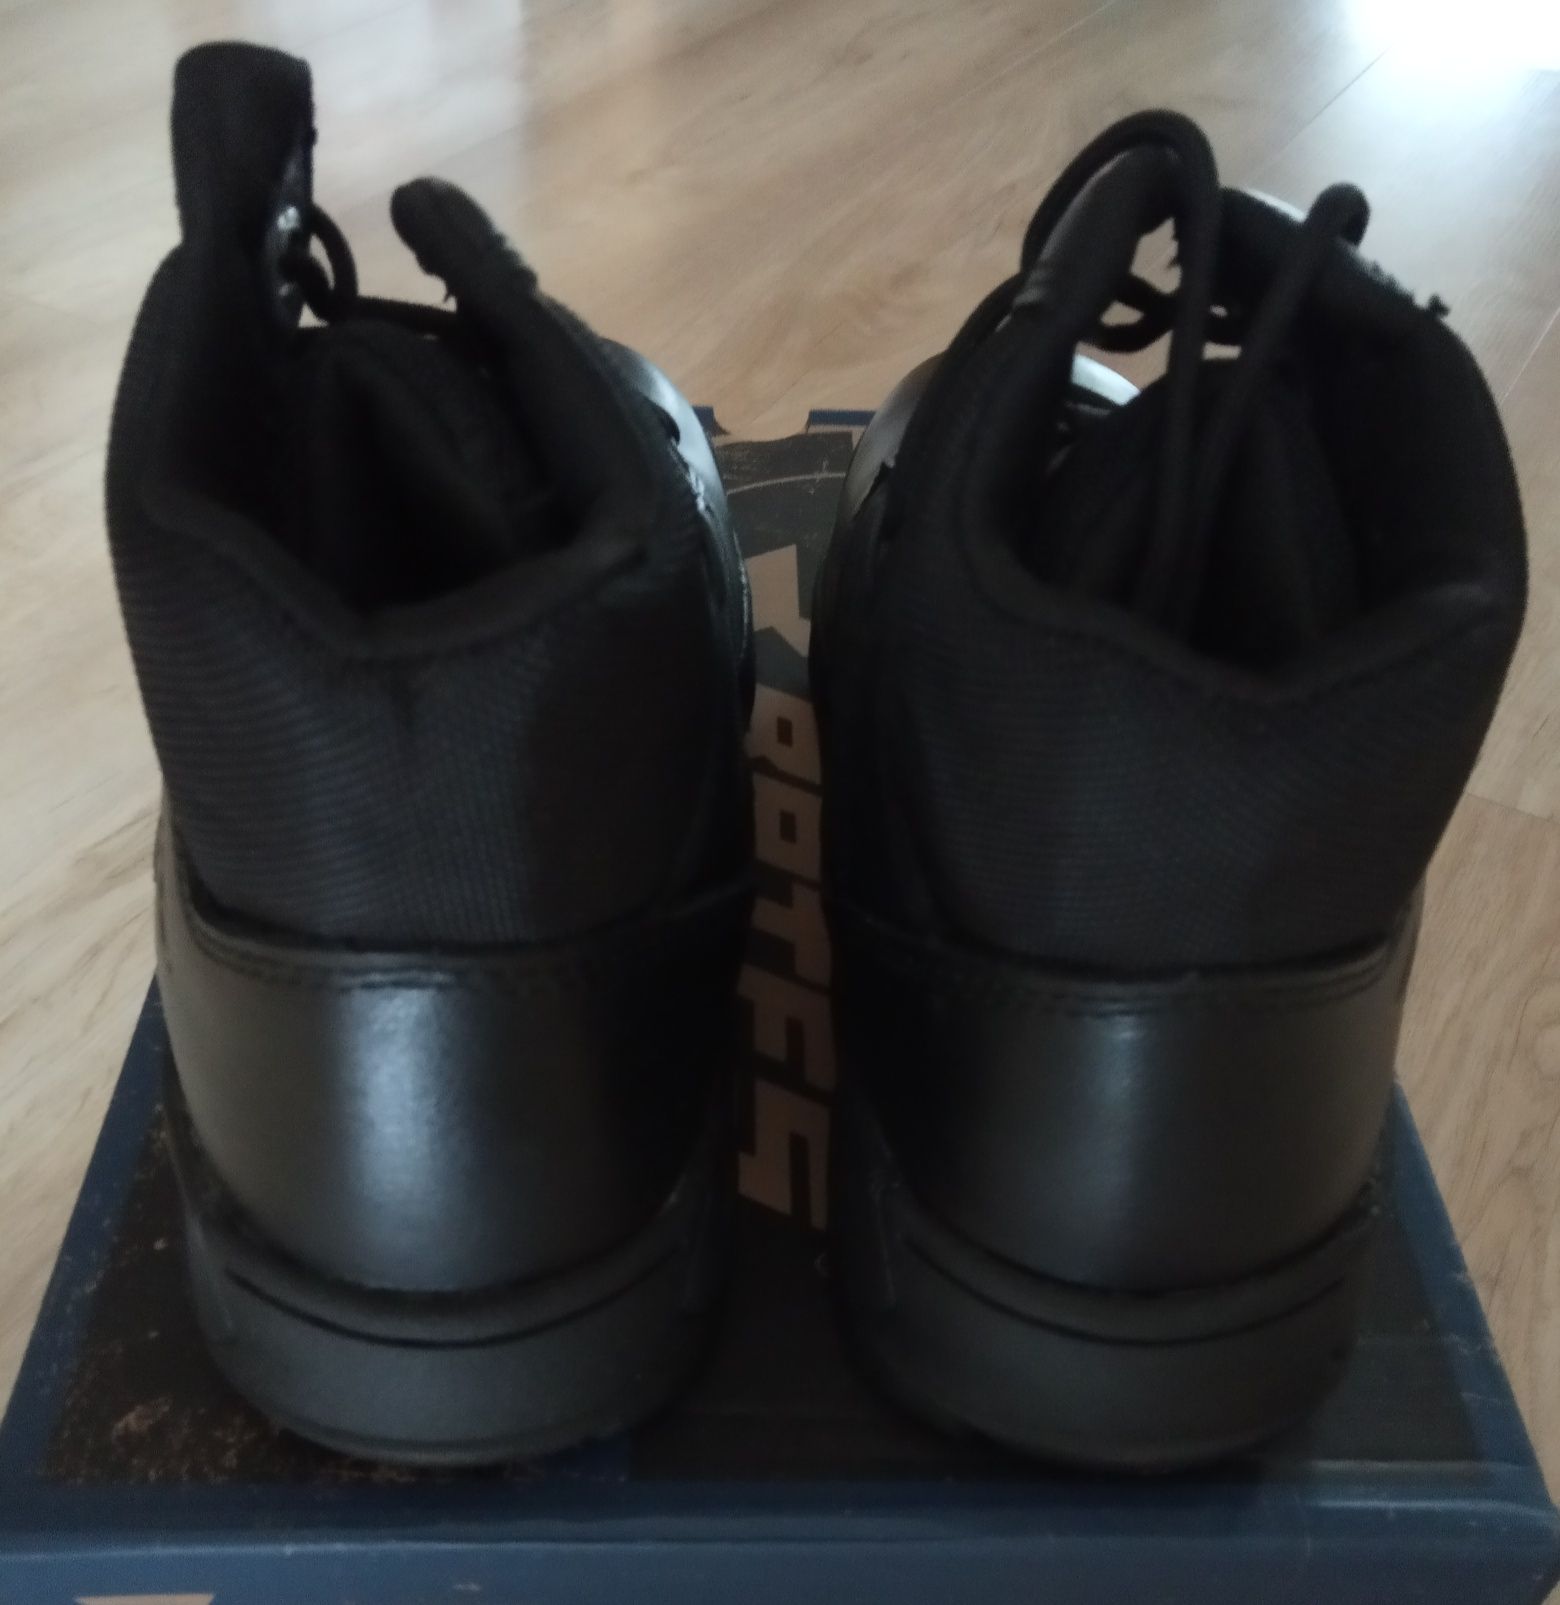 KUP Bates buty taktyczne Tactical Sport 2 E03160 Black, r. 41, 27 cm